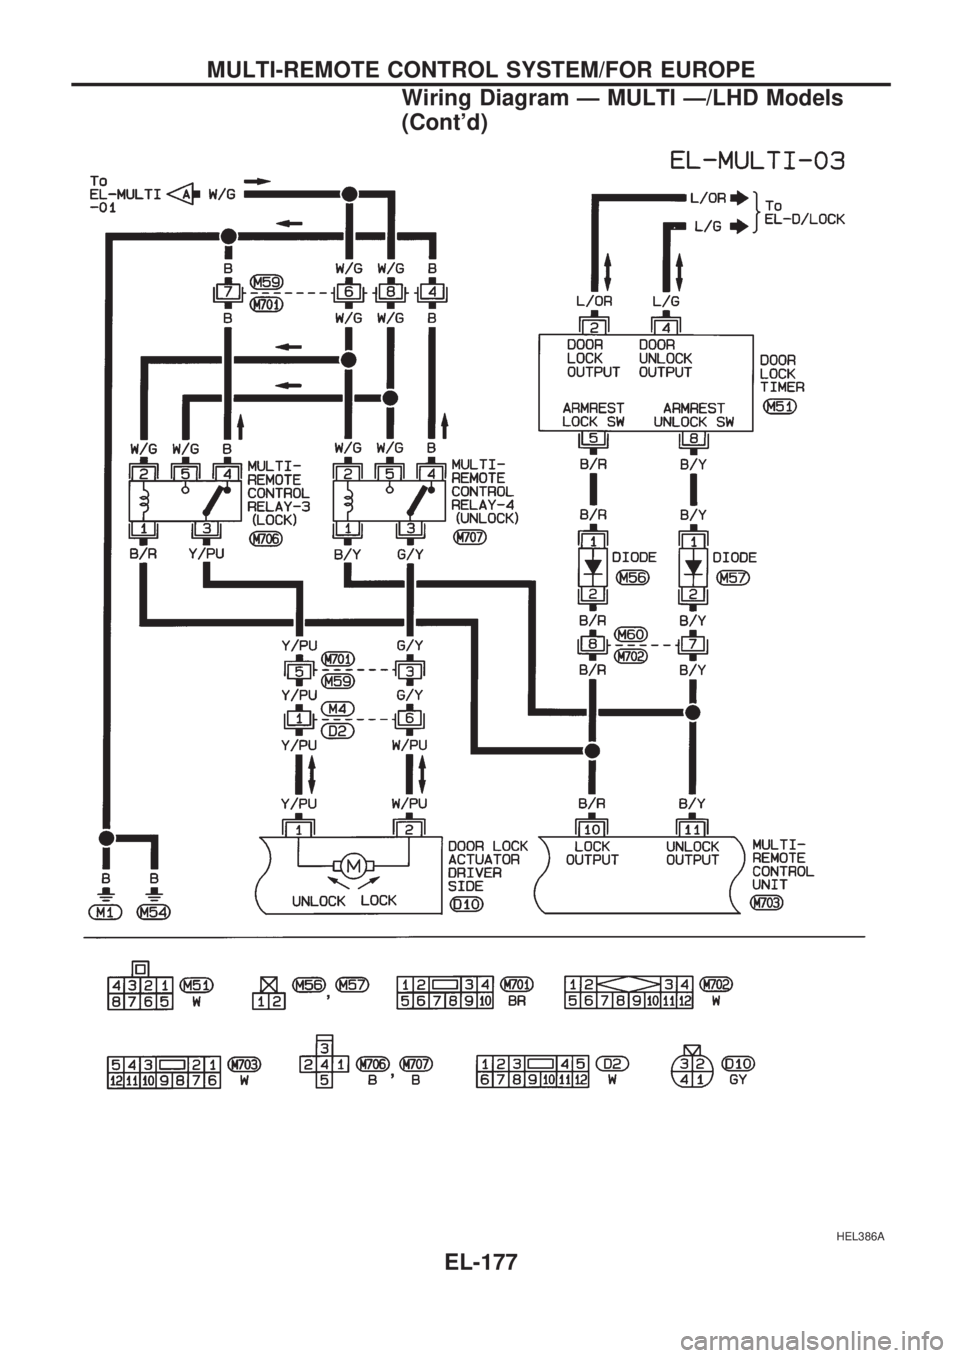 NISSAN PICK-UP 1998  Repair Manual HEL386A
MULTI-REMOTE CONTROL SYSTEM/FOR EUROPE
Wiring Diagram Ð MULTI Ð/LHD Models
(Contd)
EL-177 